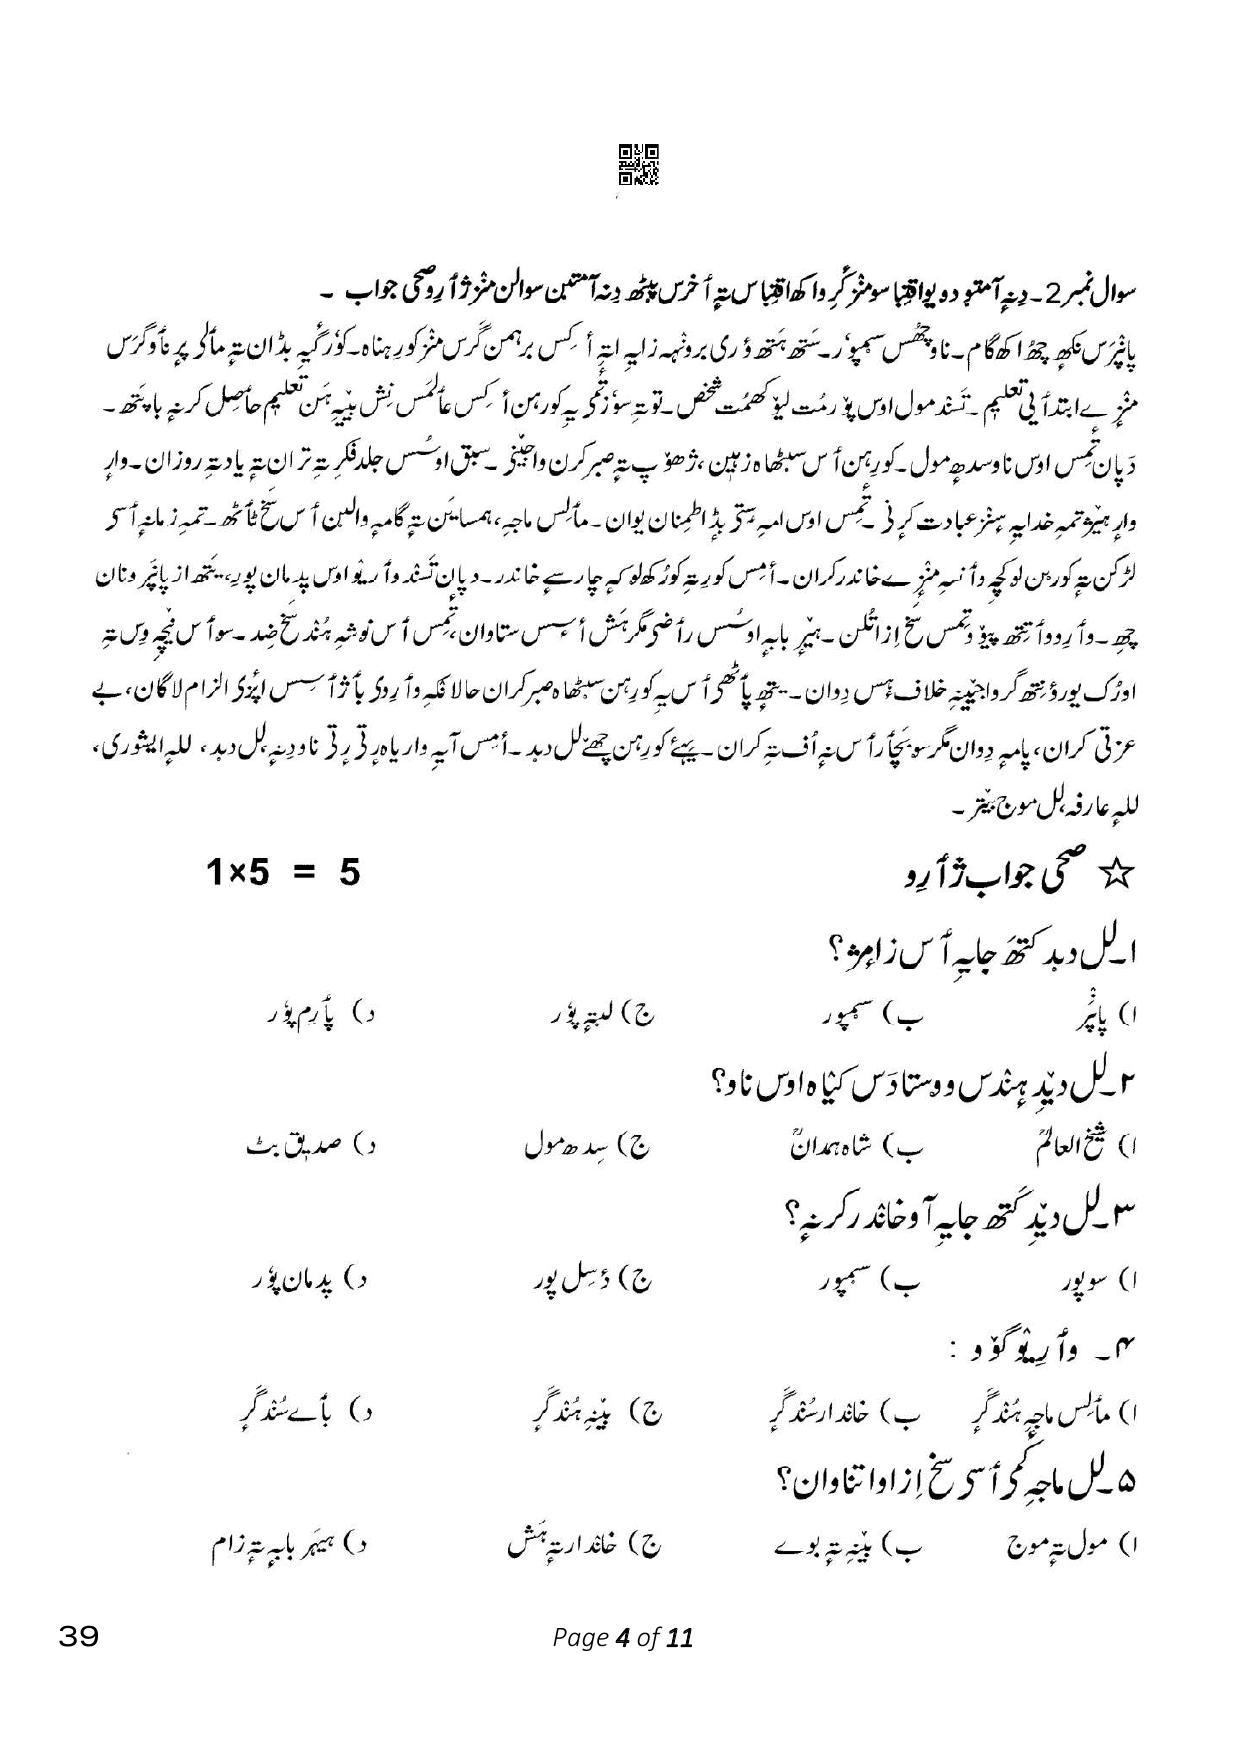 CBSE Class 10 39_Kashmiri 2023 Question Paper - Page 4